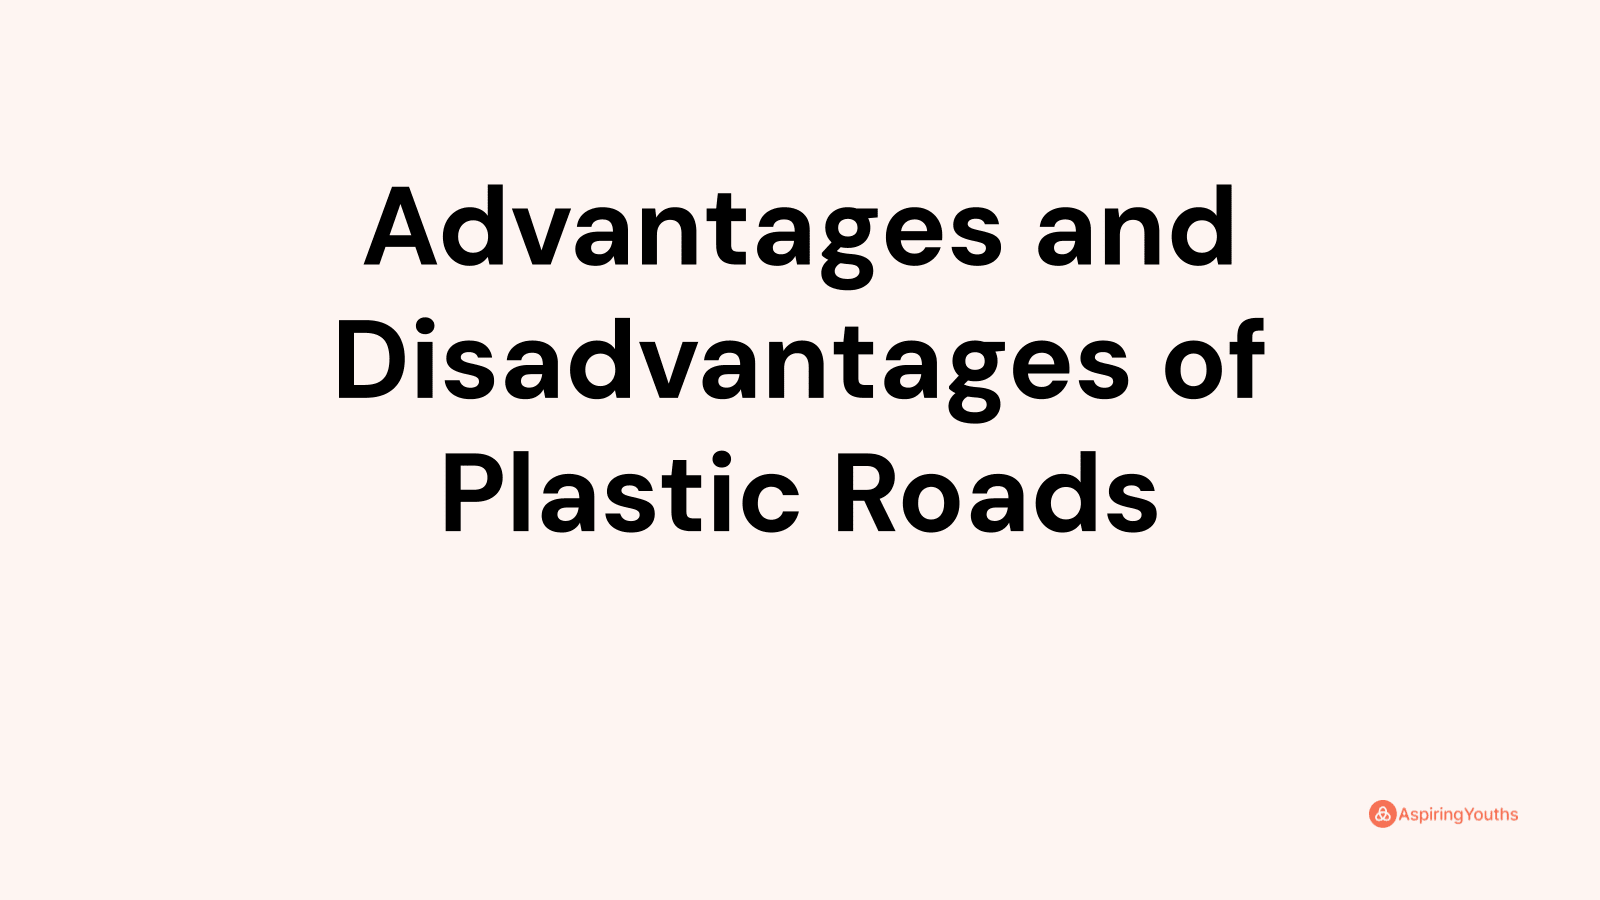 Advantages and disadvantages of Plastic Roads